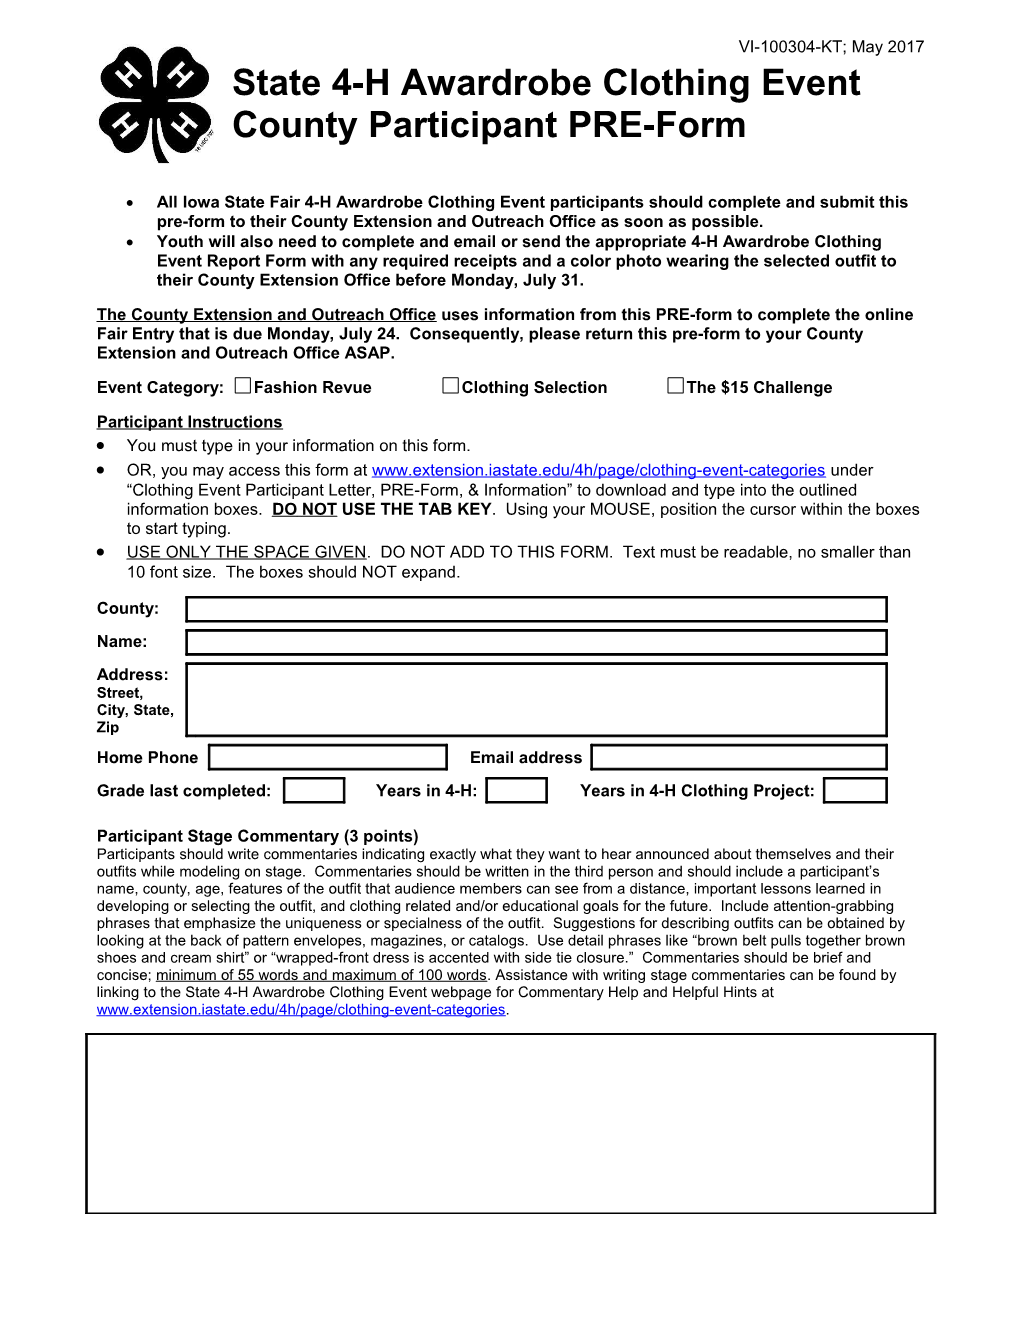 County Participant PRE-Form